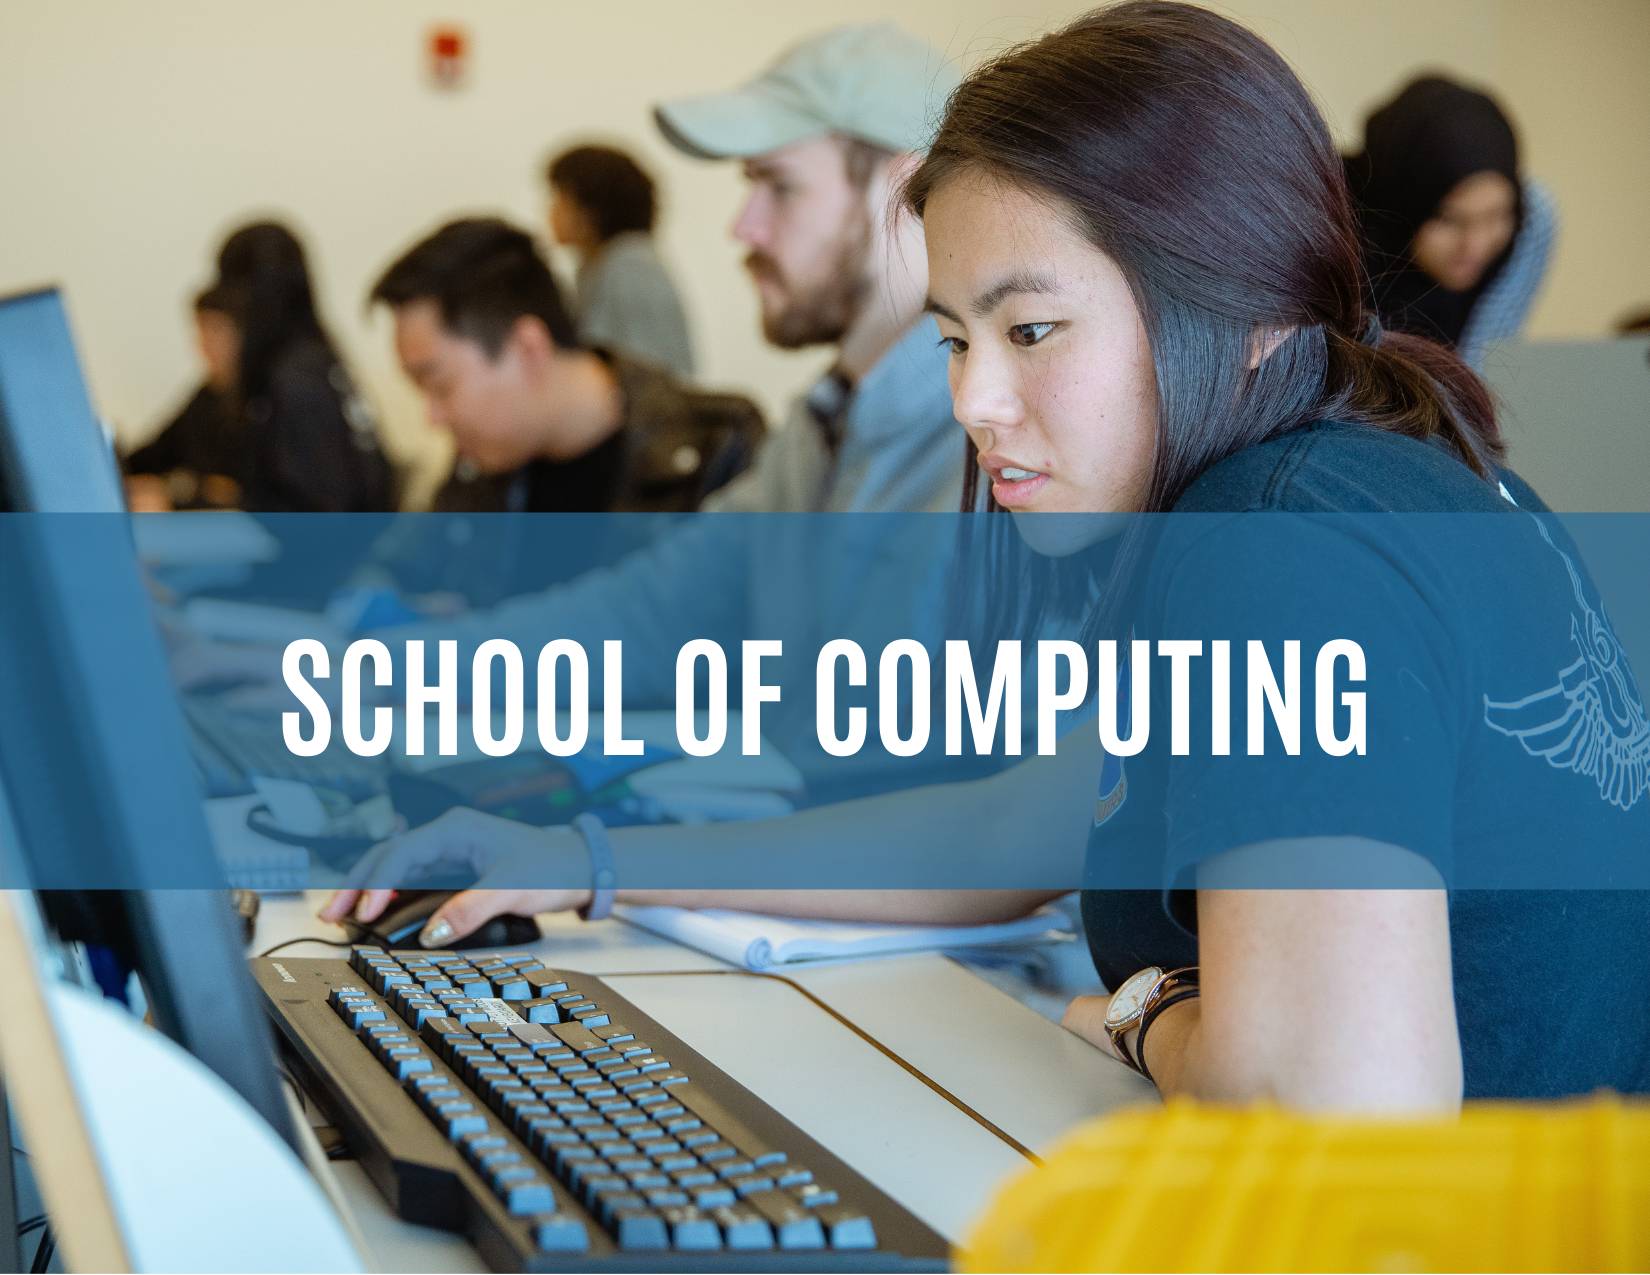 School of Computing - Computing student review code